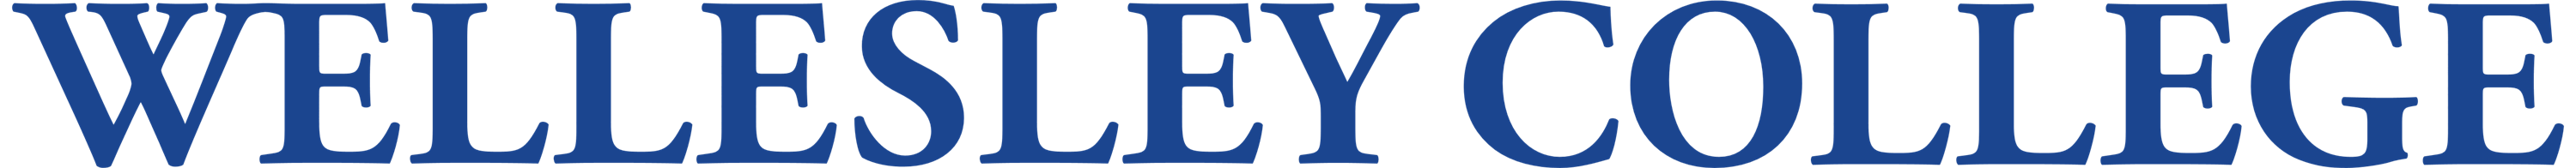 Wellesley College Logo Image.